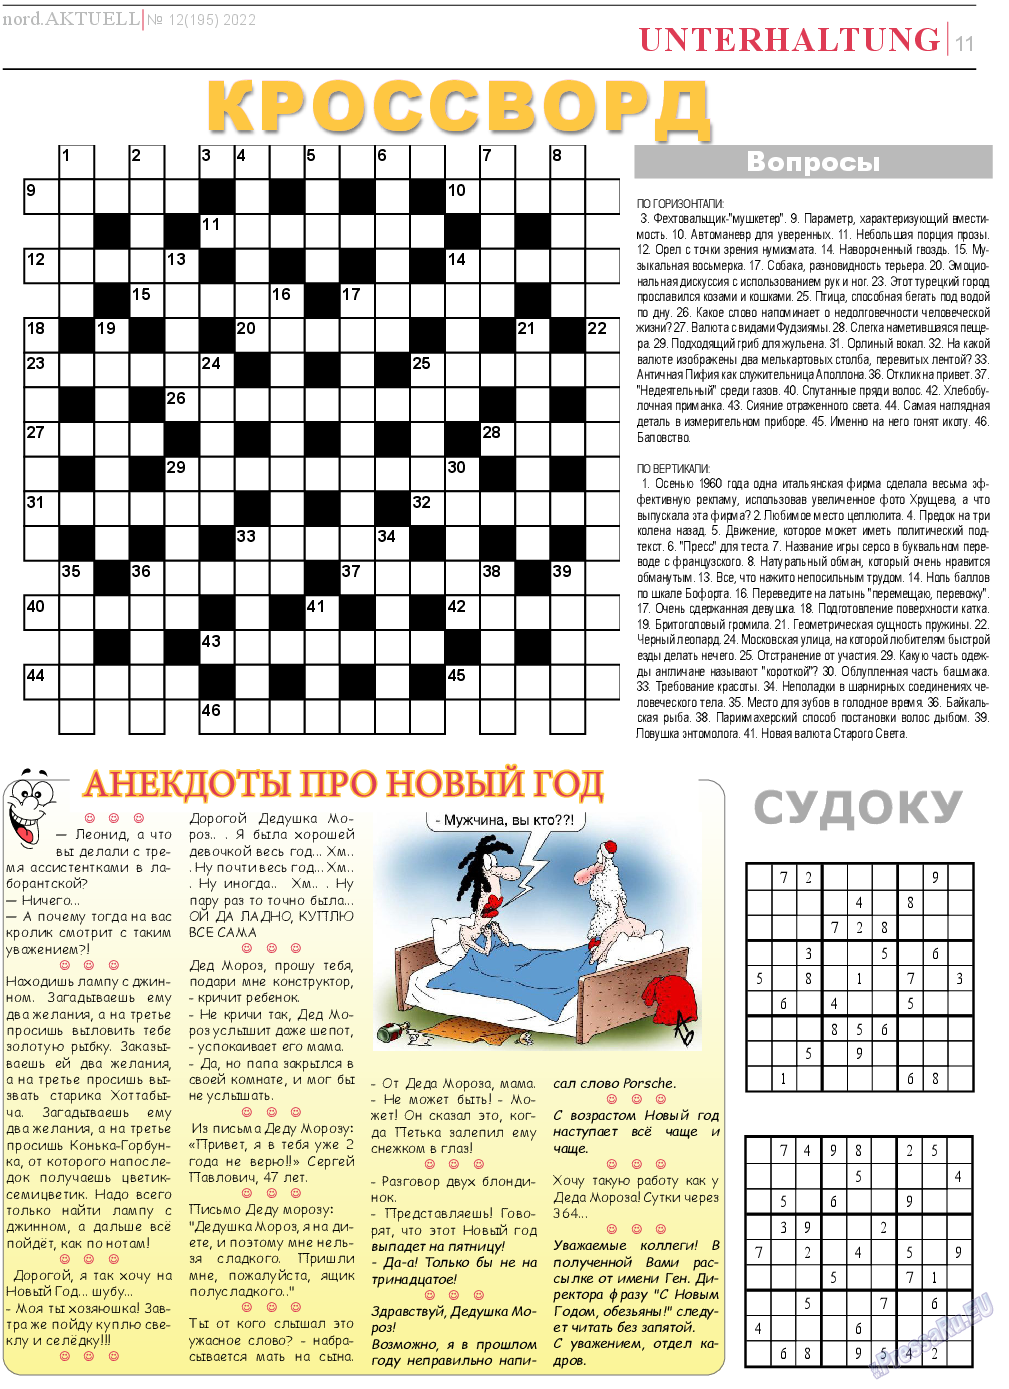 nord.Aktuell, газета. 2022 №12 стр.11